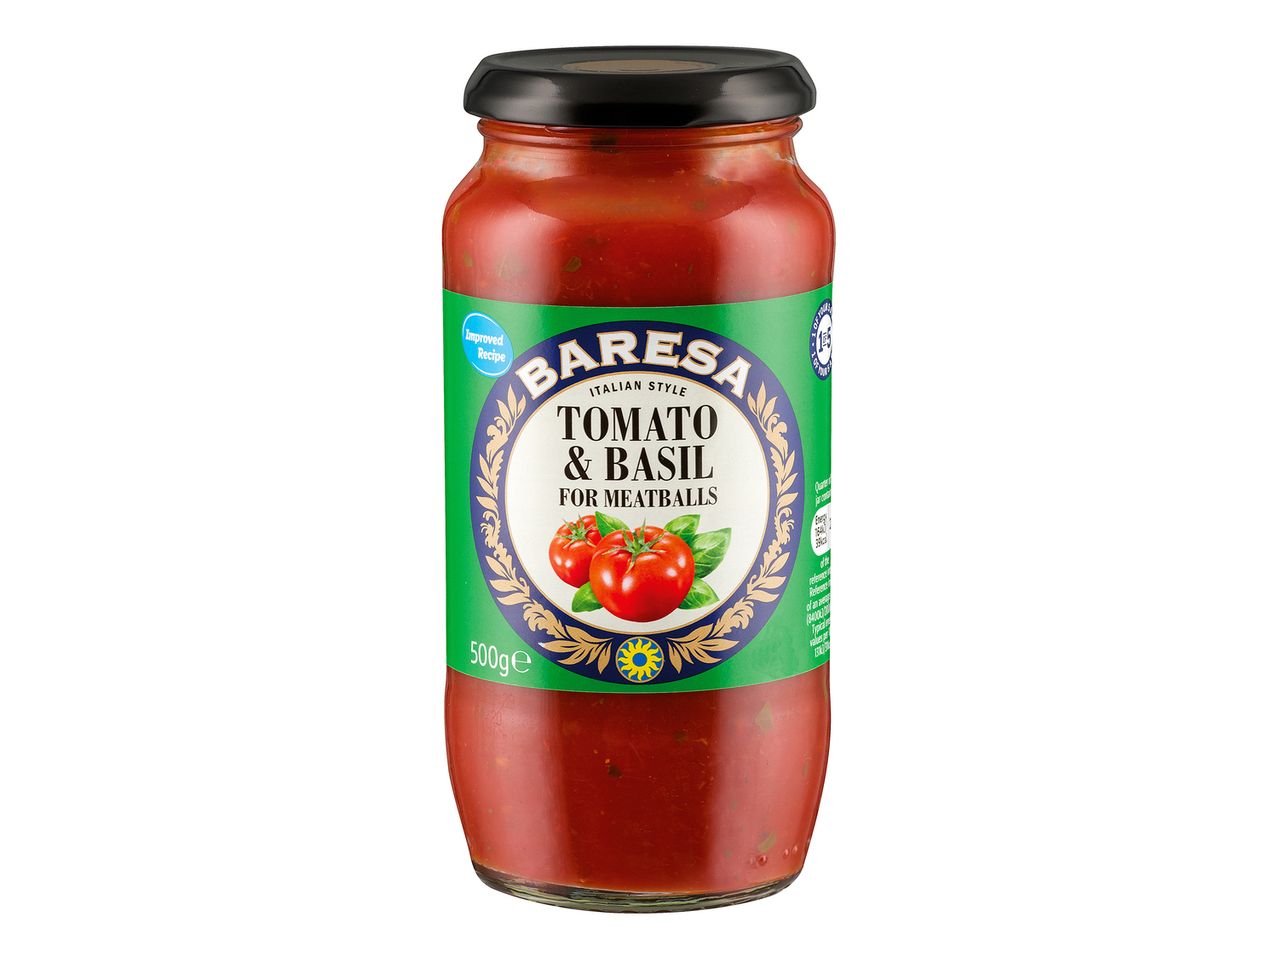 Go to full screen view: Baresa Pasta Sauce - Image 6